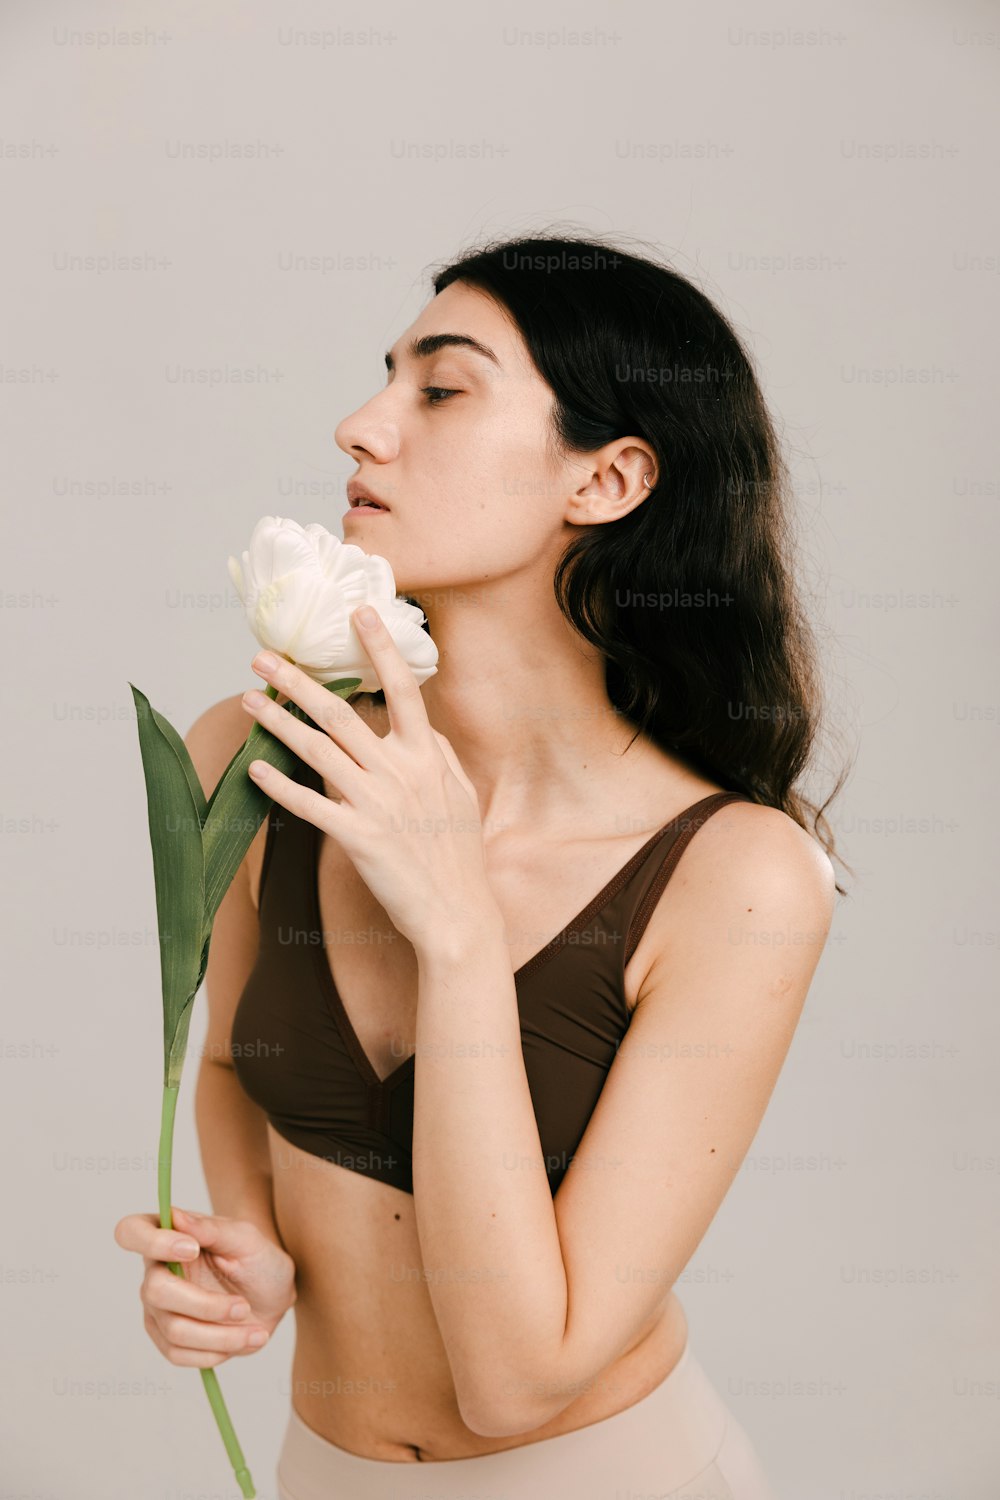 a woman in a bikini holding a flower